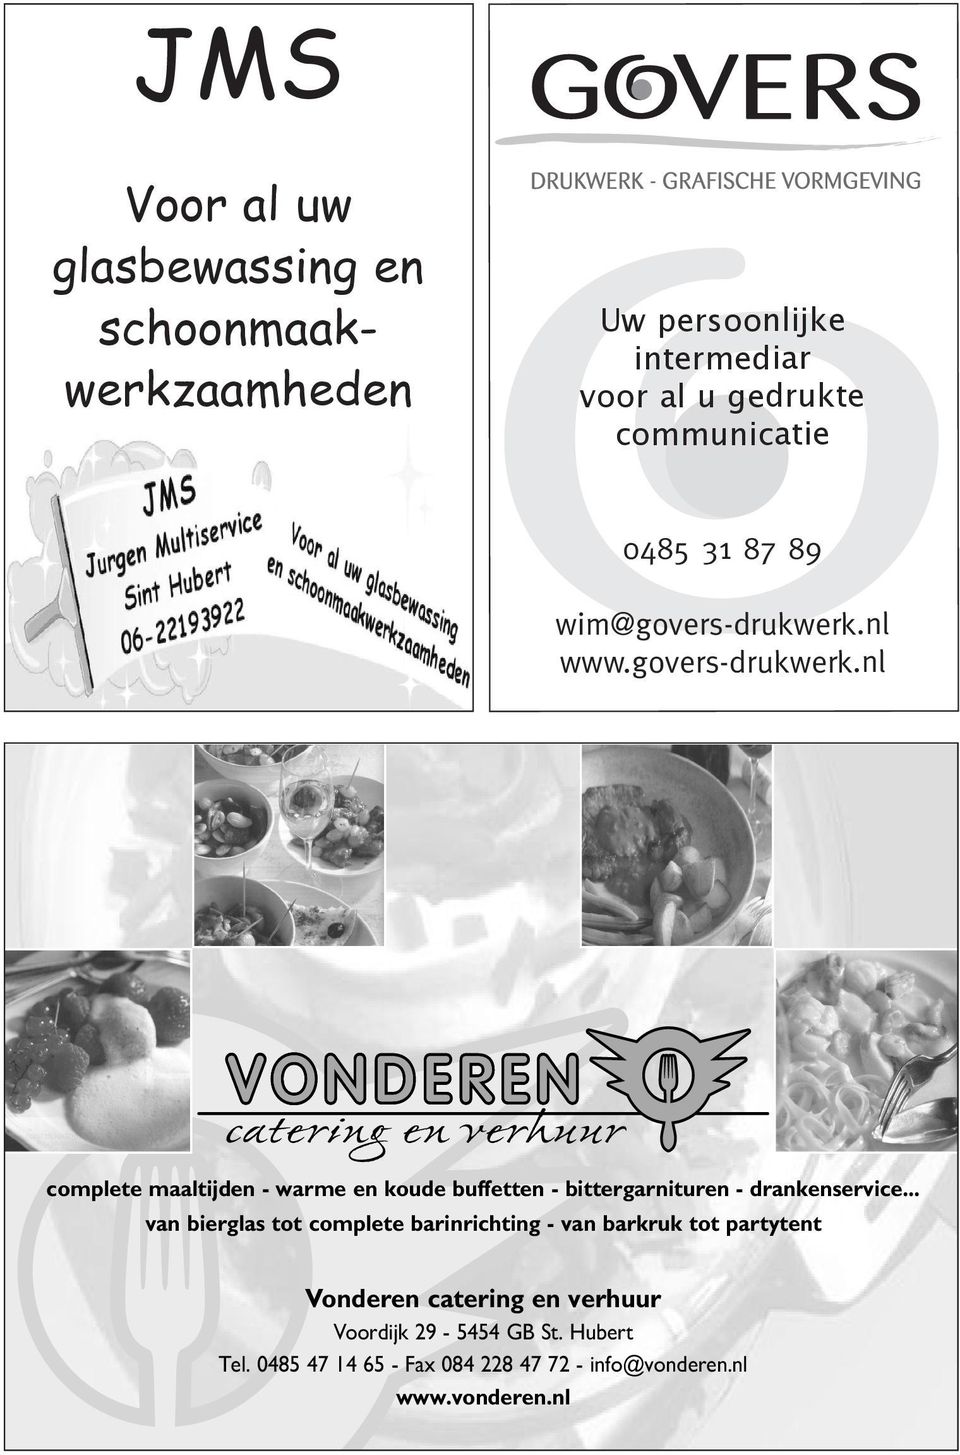 nl www.govers-drukwerk.nl complete maaltijden - warme en koude buffetten - bittergarnituren - drankenservice.